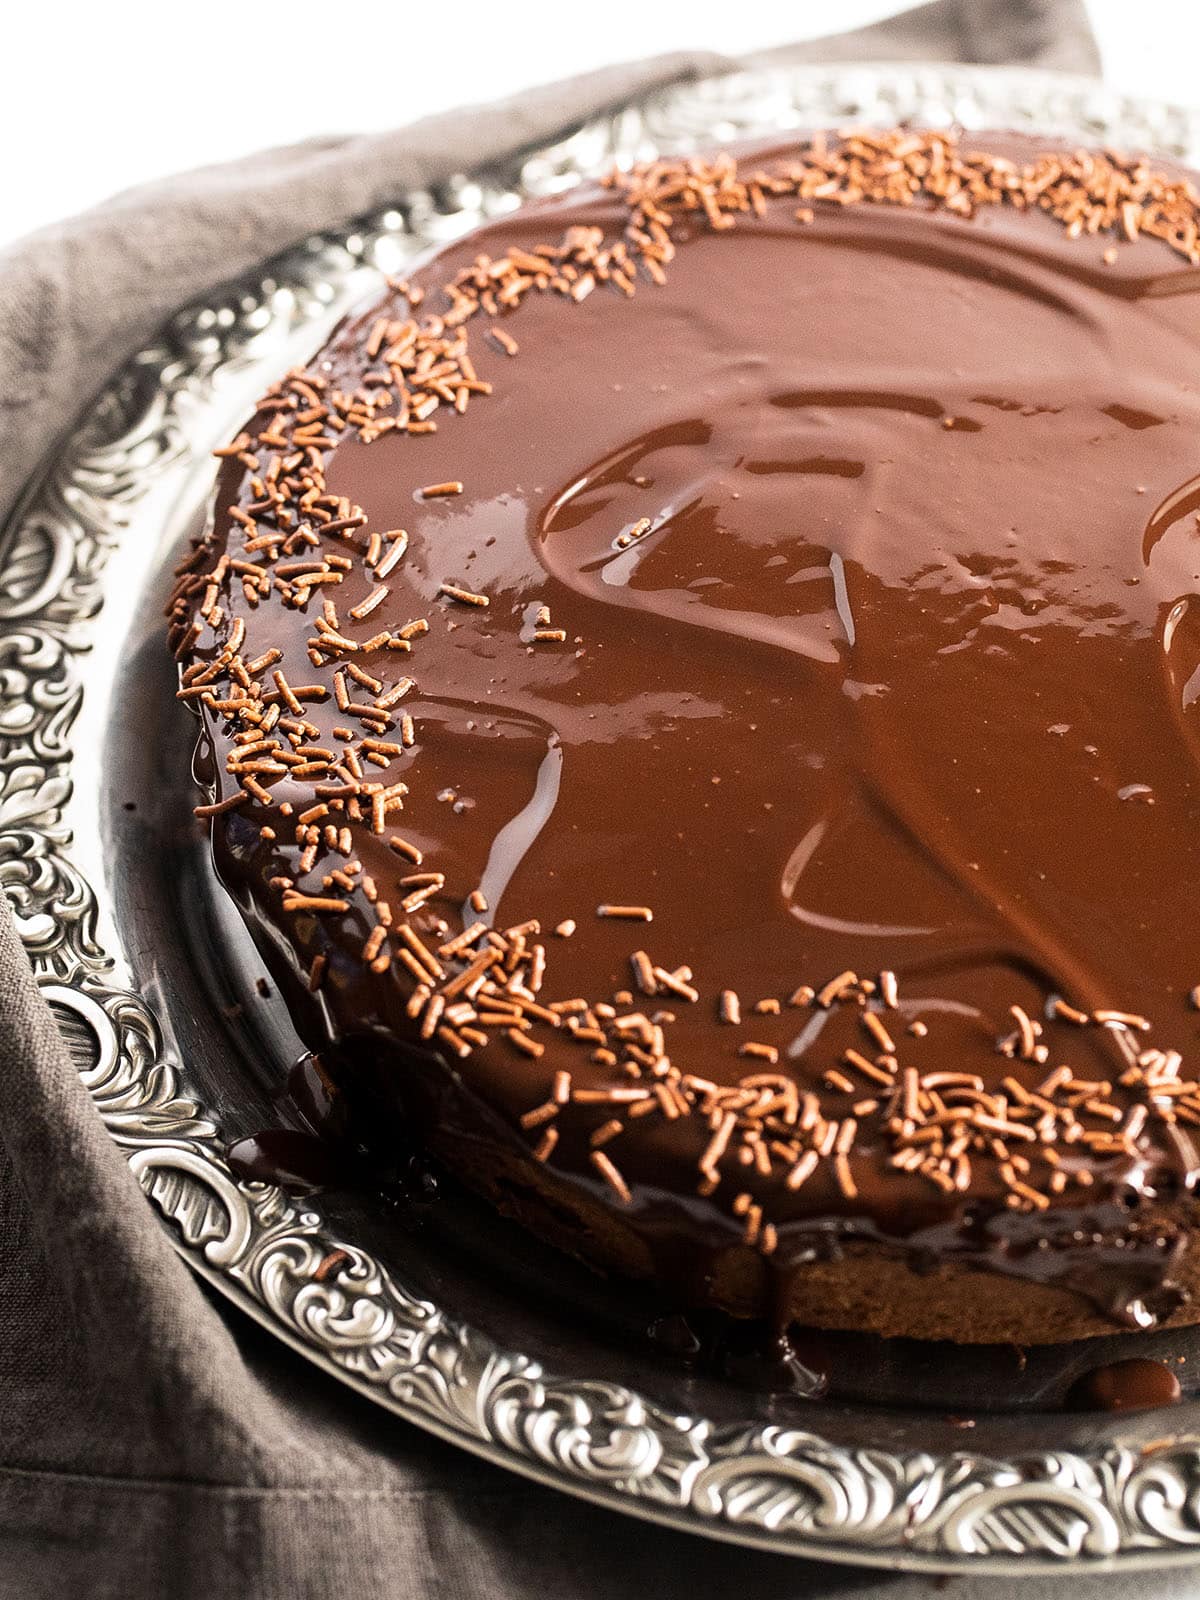 shiny glazed chocolate cake made with irish cream liqueur.